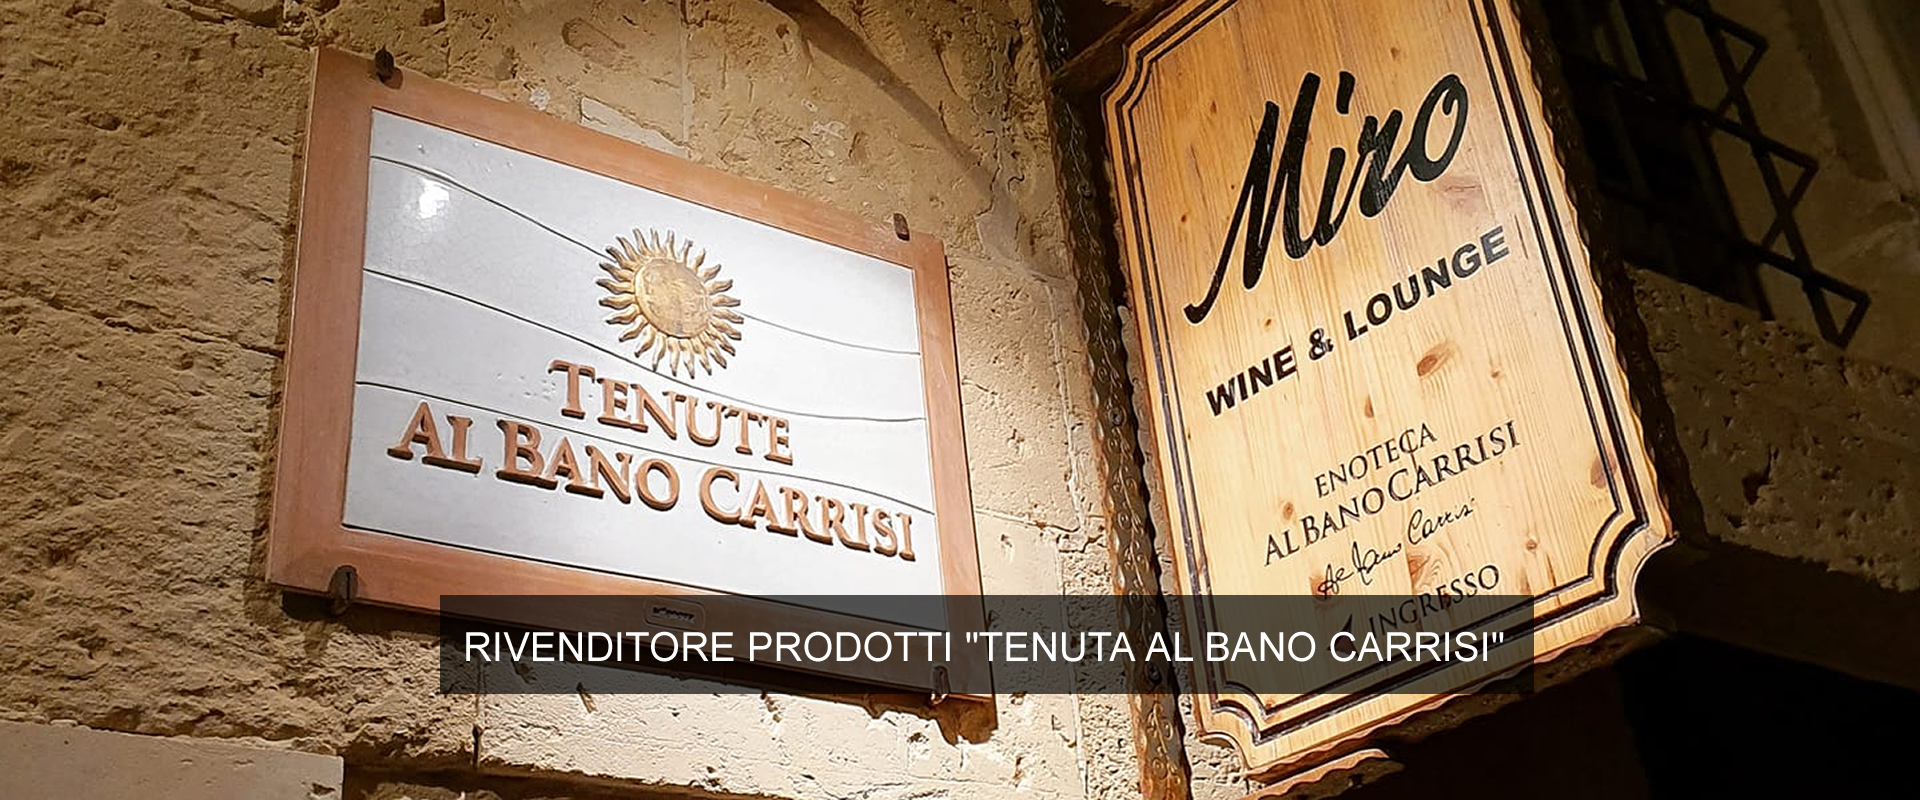 Miro Wine&Lounge